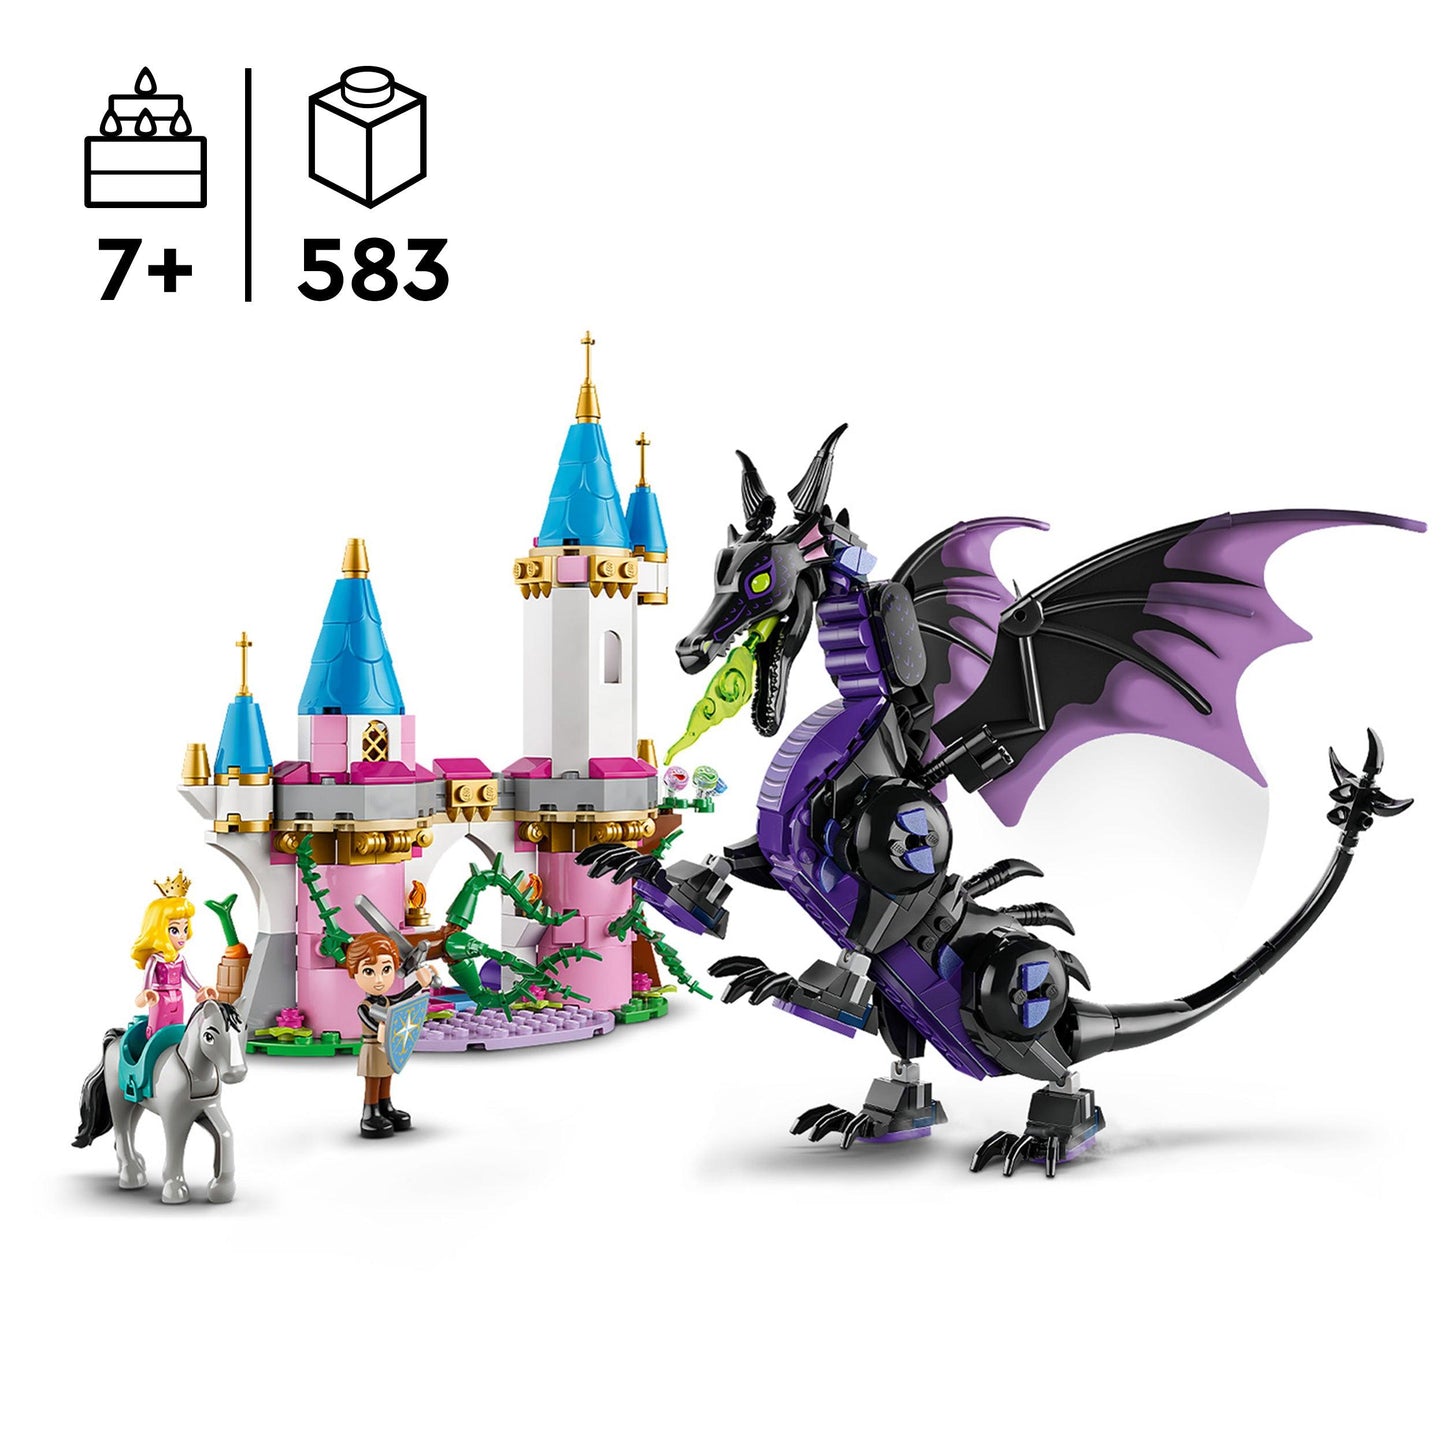 LEGO Maleficent in drakenvorm 43240 Friends (Pre-Order: verwacht juni) LEGO DISNEY @ 2TTOYS LEGO €. 59.49